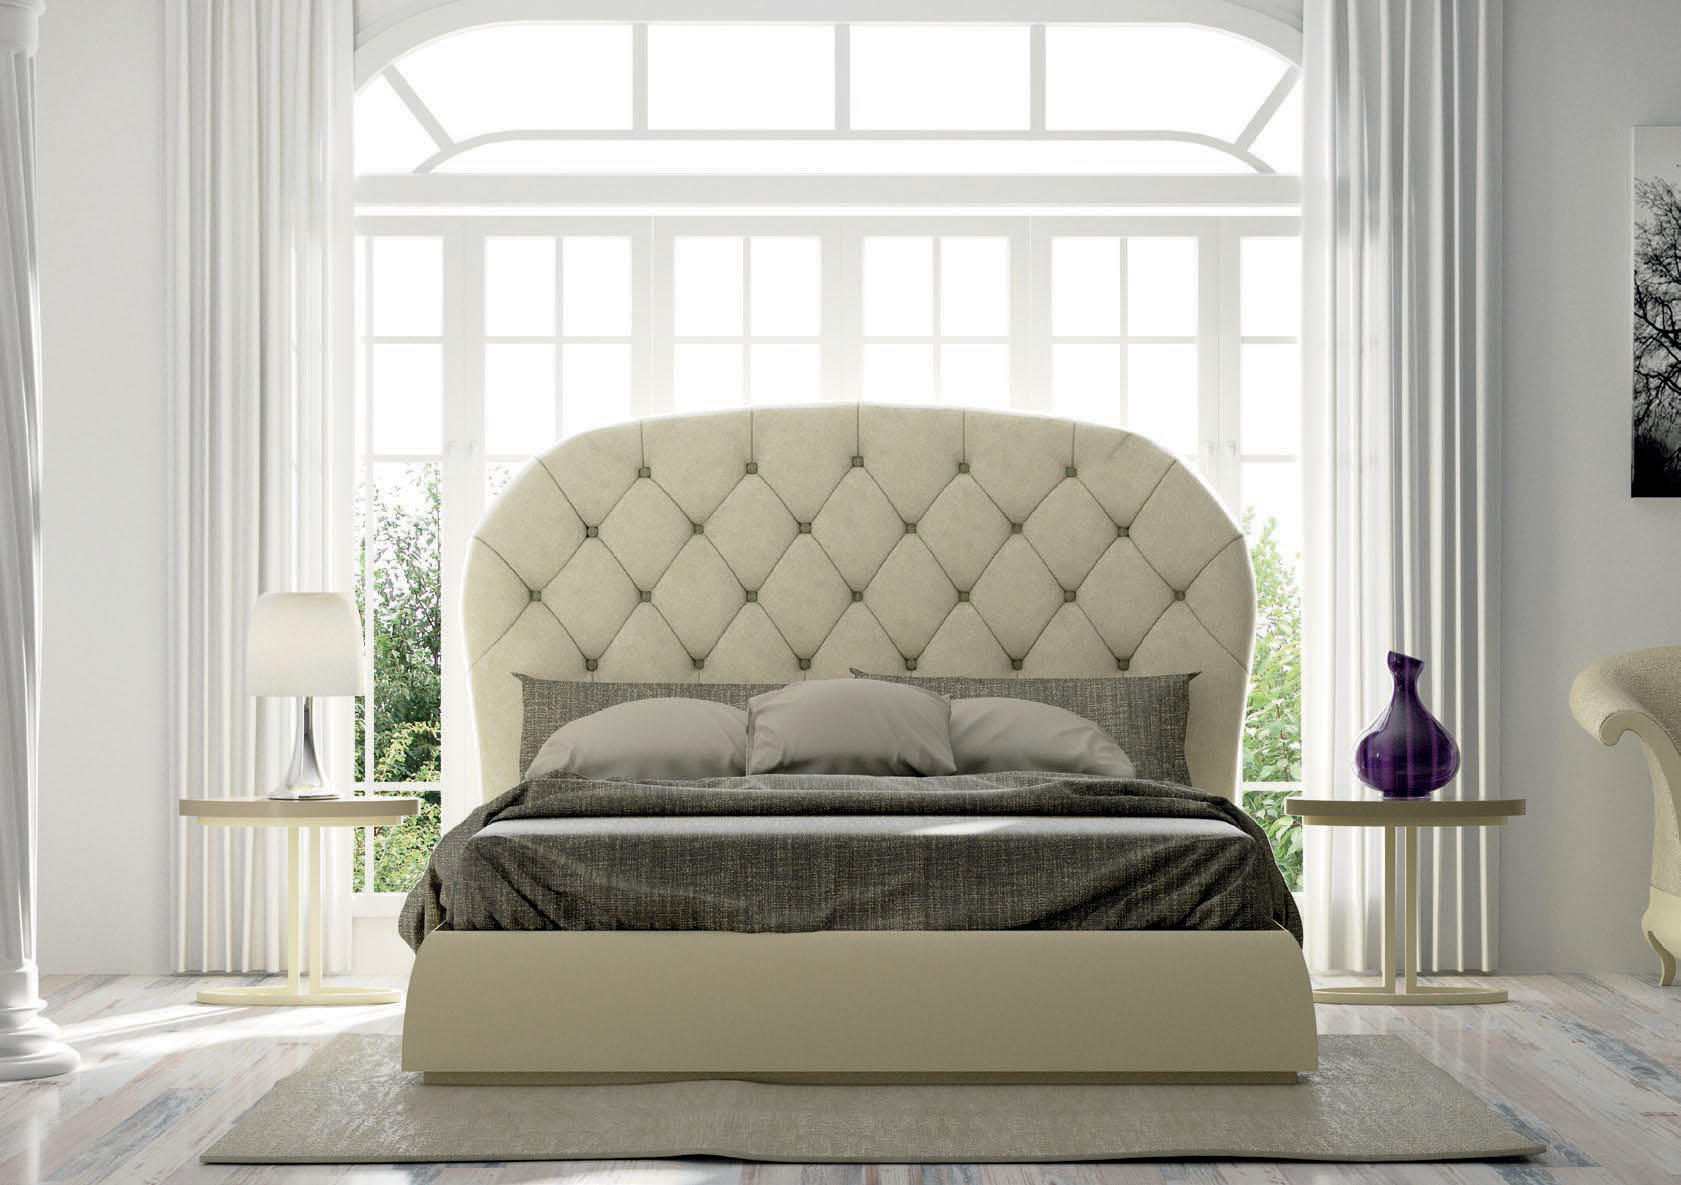 Brands Franco Furniture Bedrooms vol2, Spain DOR 150